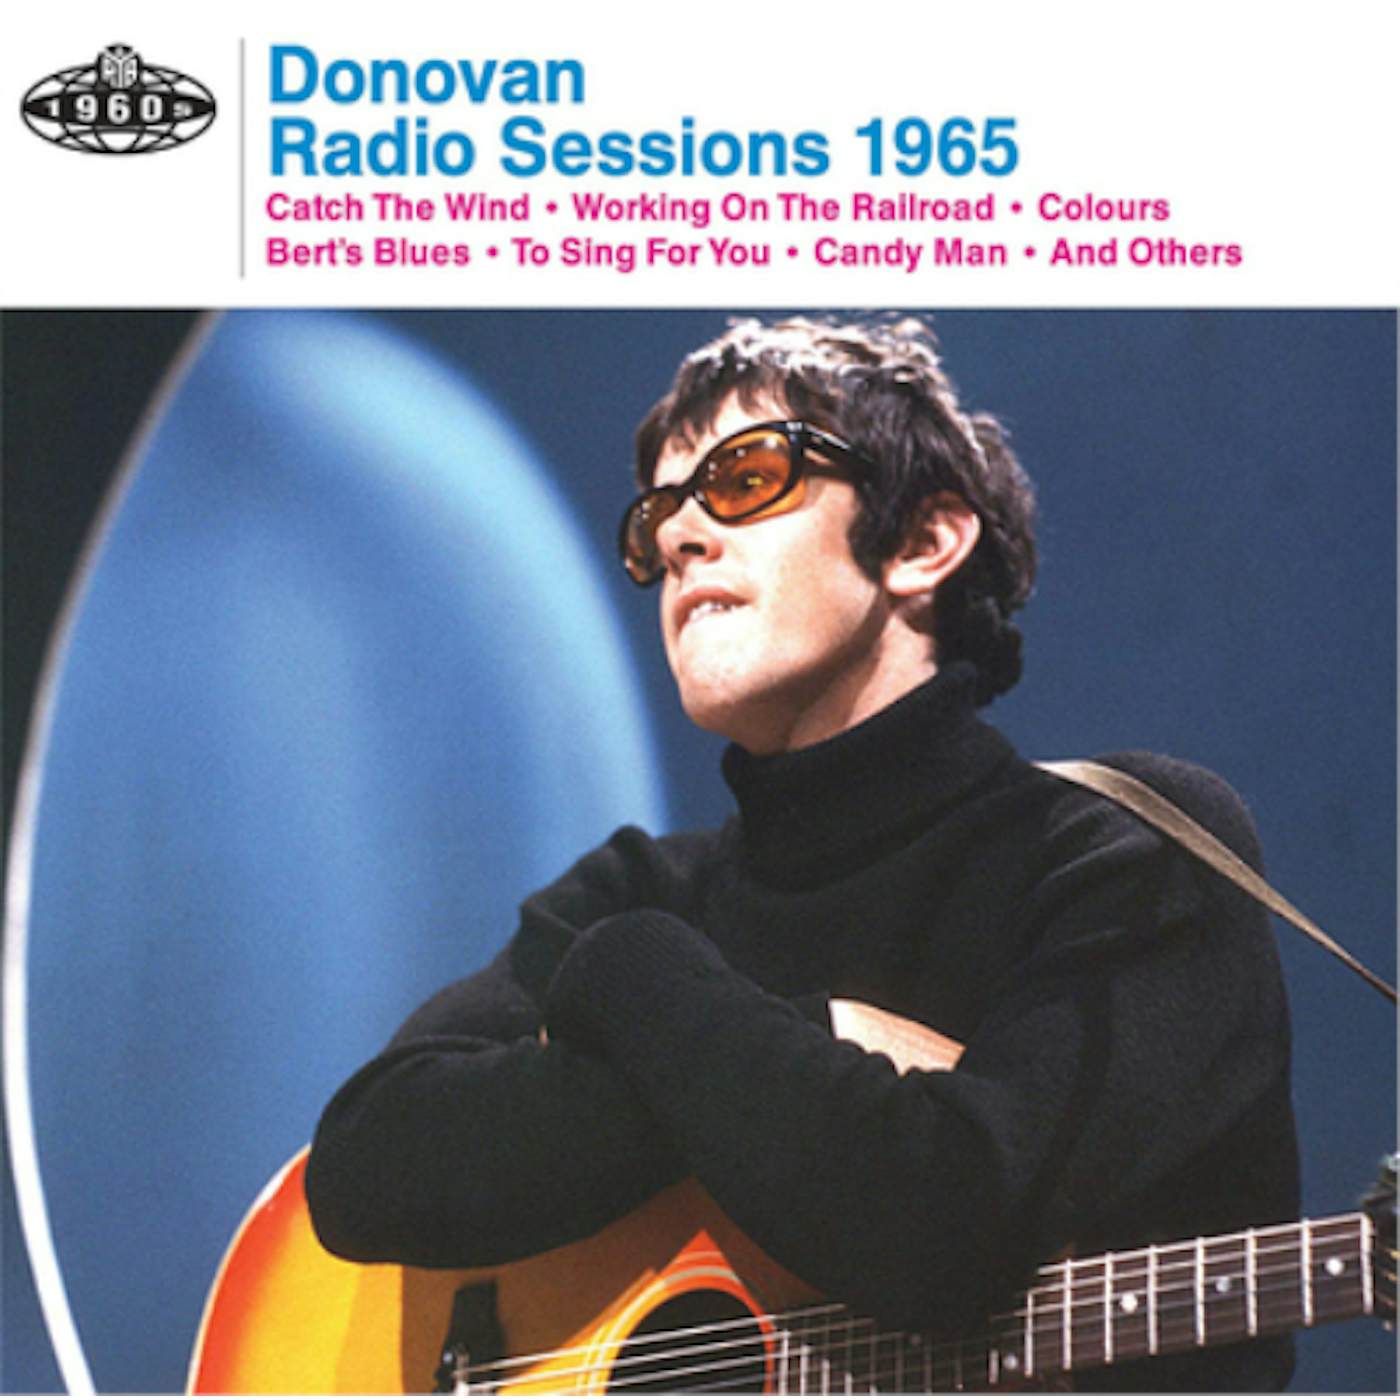 Donovan RADIO SESSIONS 1965 Vinyl Record